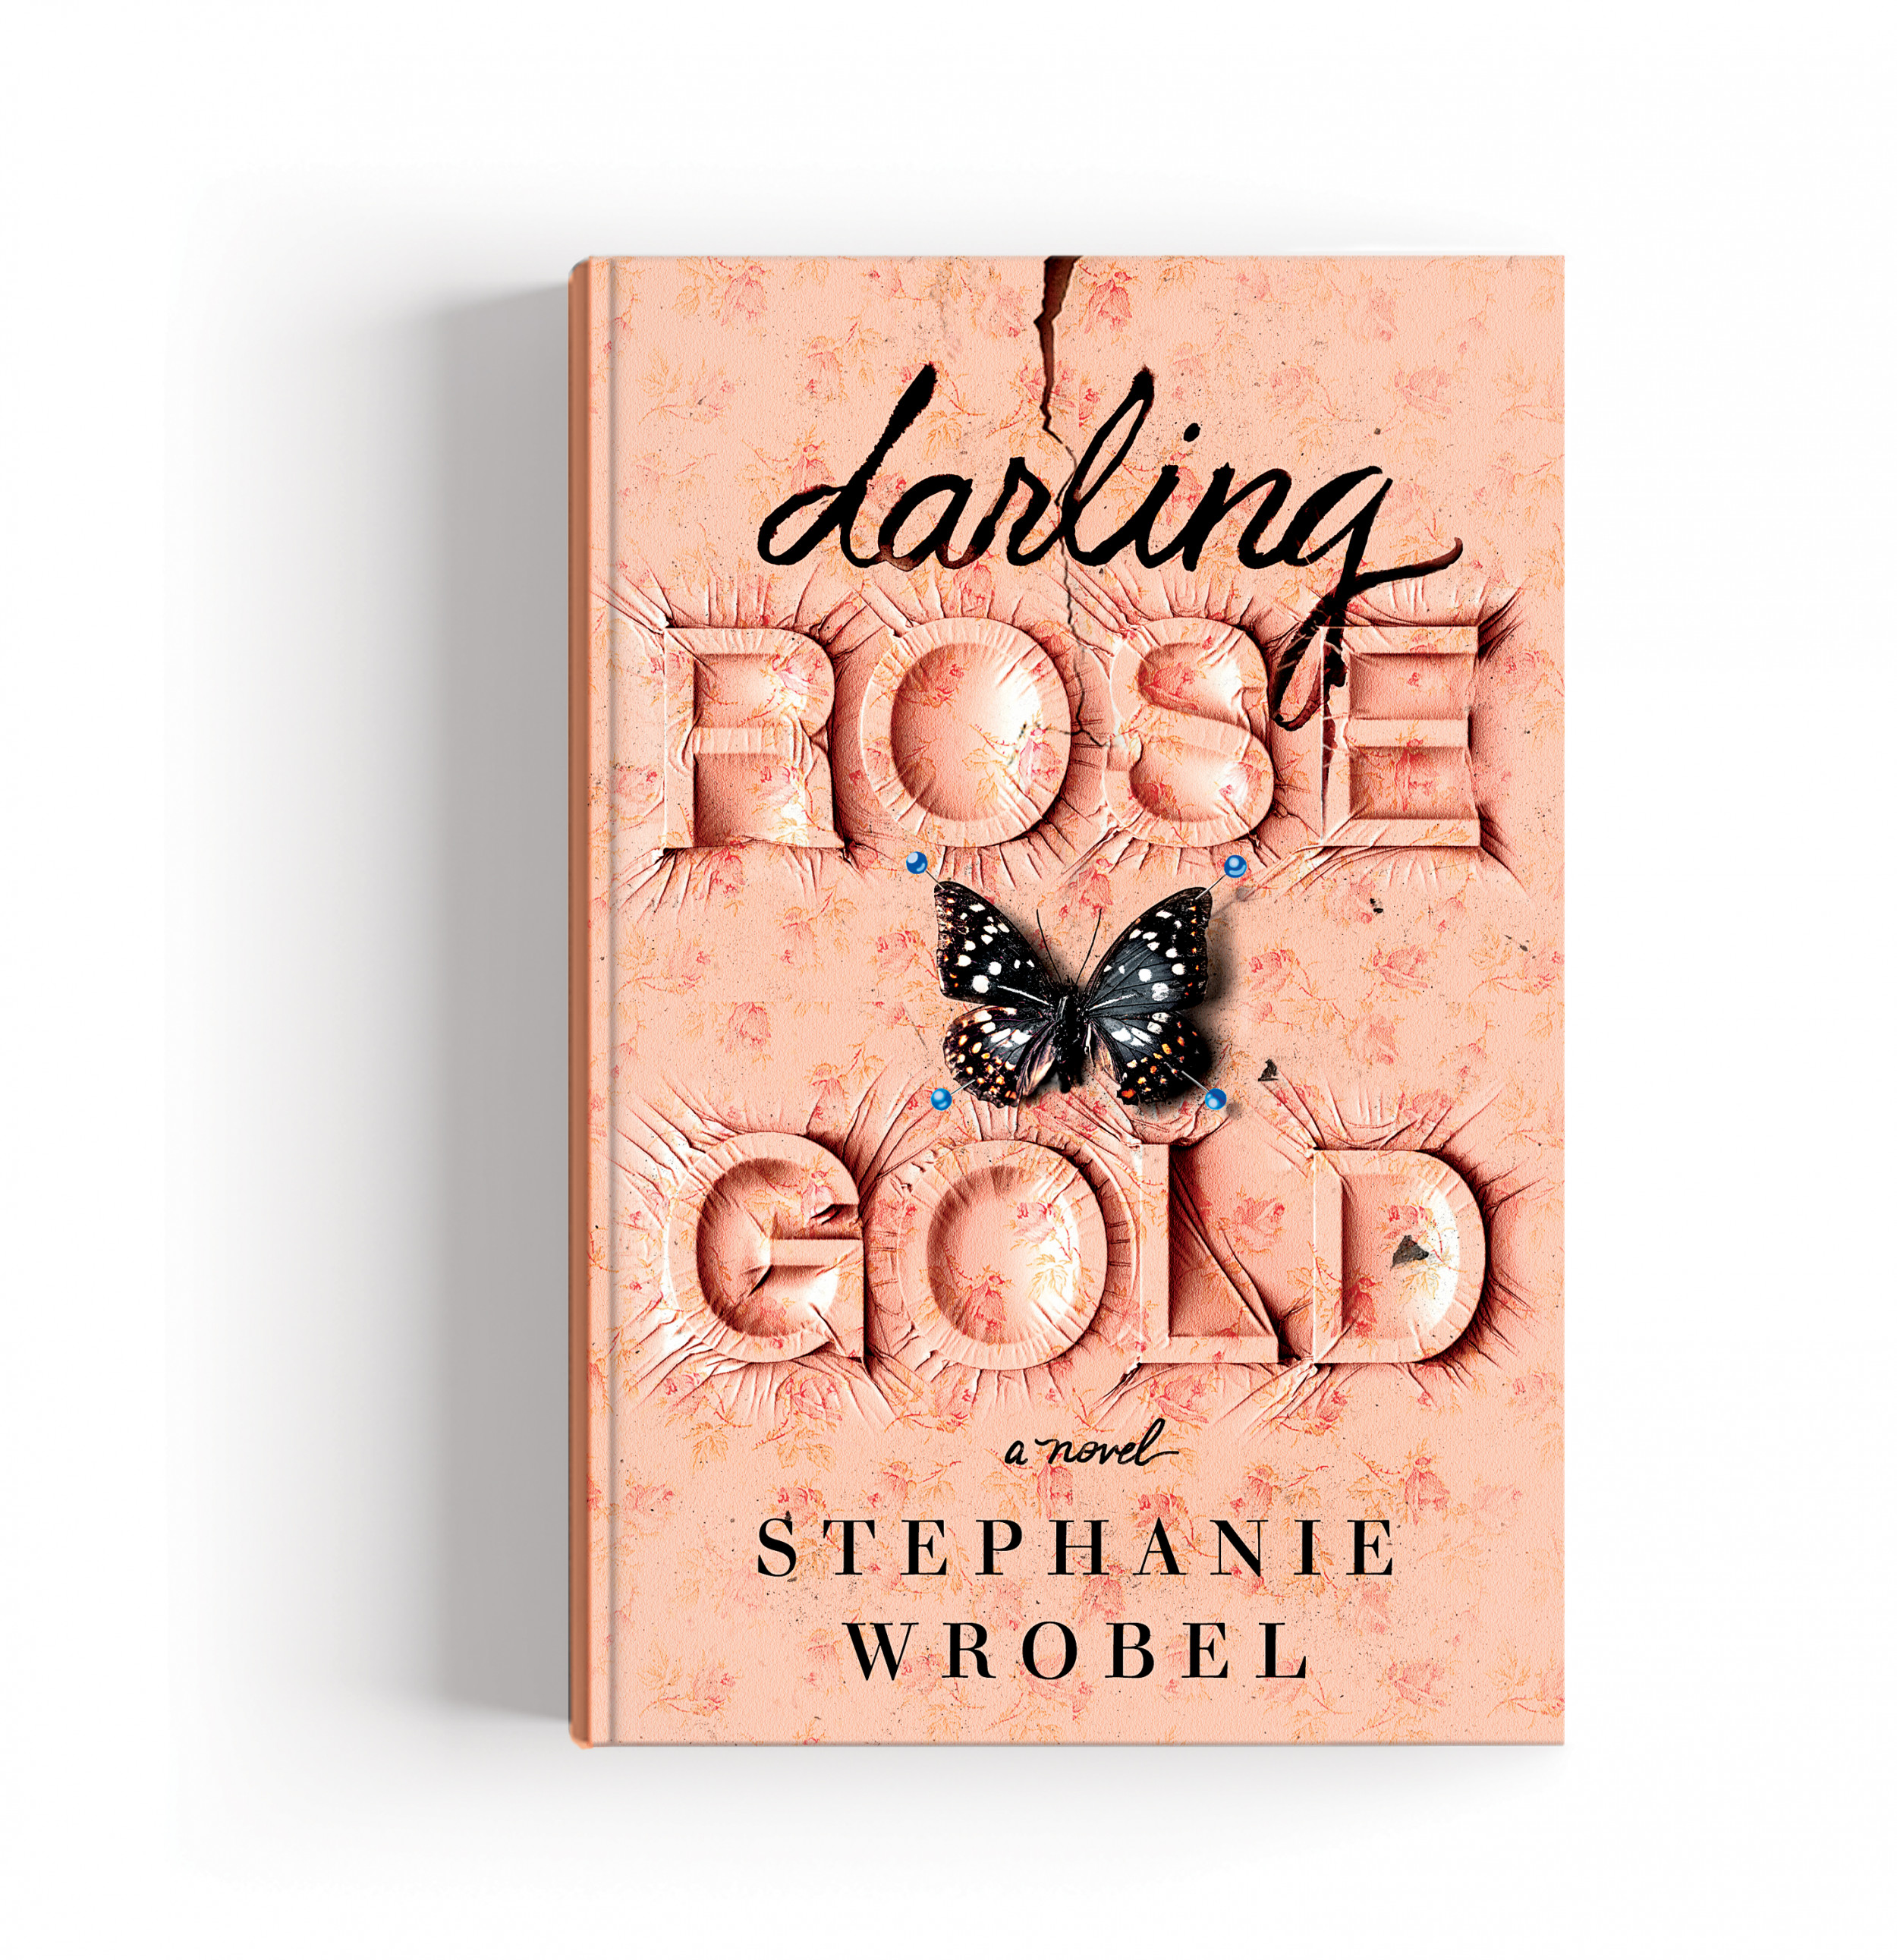 darling rose gold by stephanie wrobel